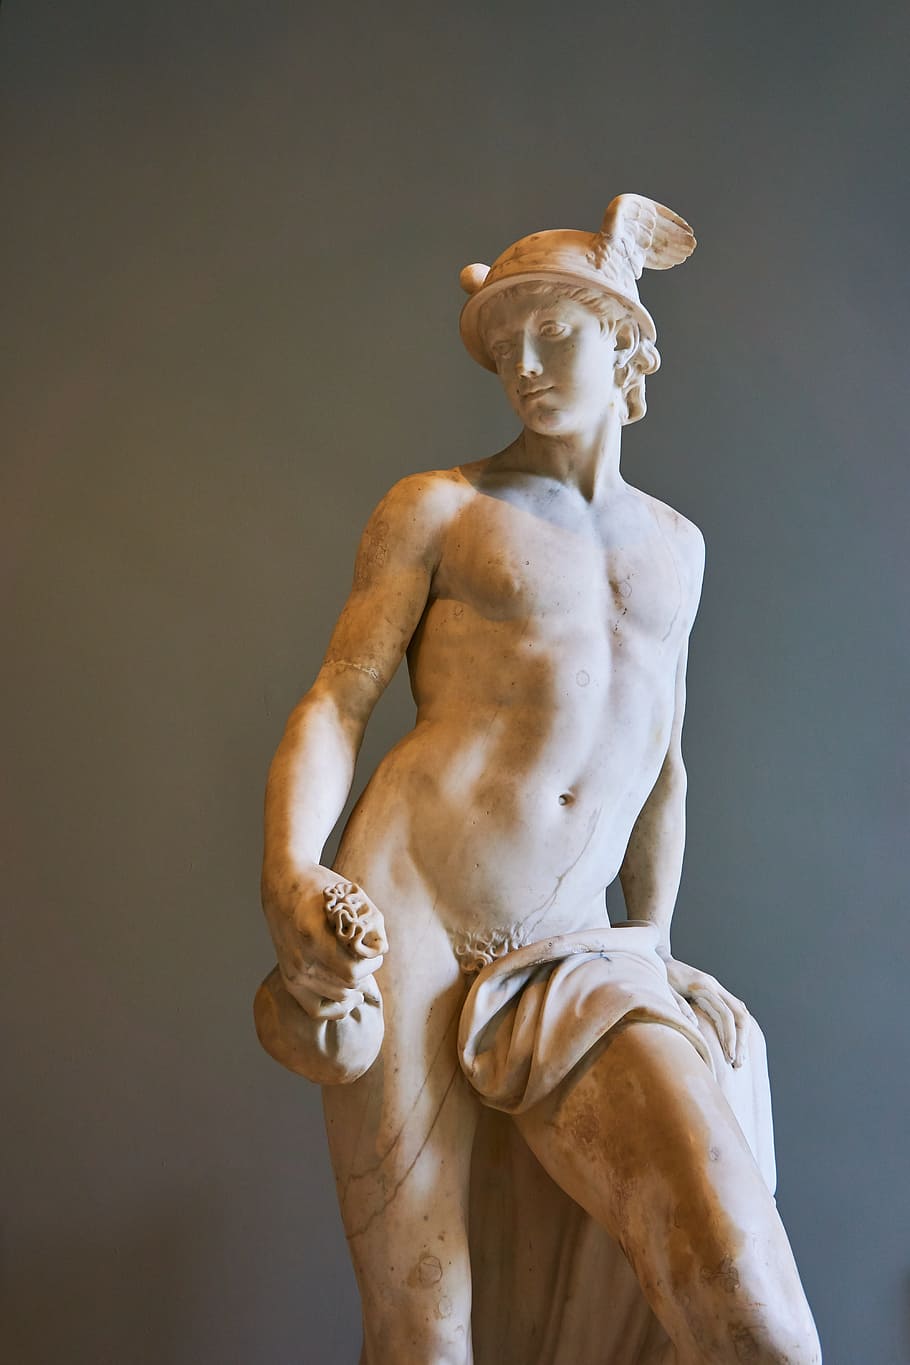 masculino, estatua del dios griego, gris, pared, lumbrera, París, estatua, museo, Francia, arte